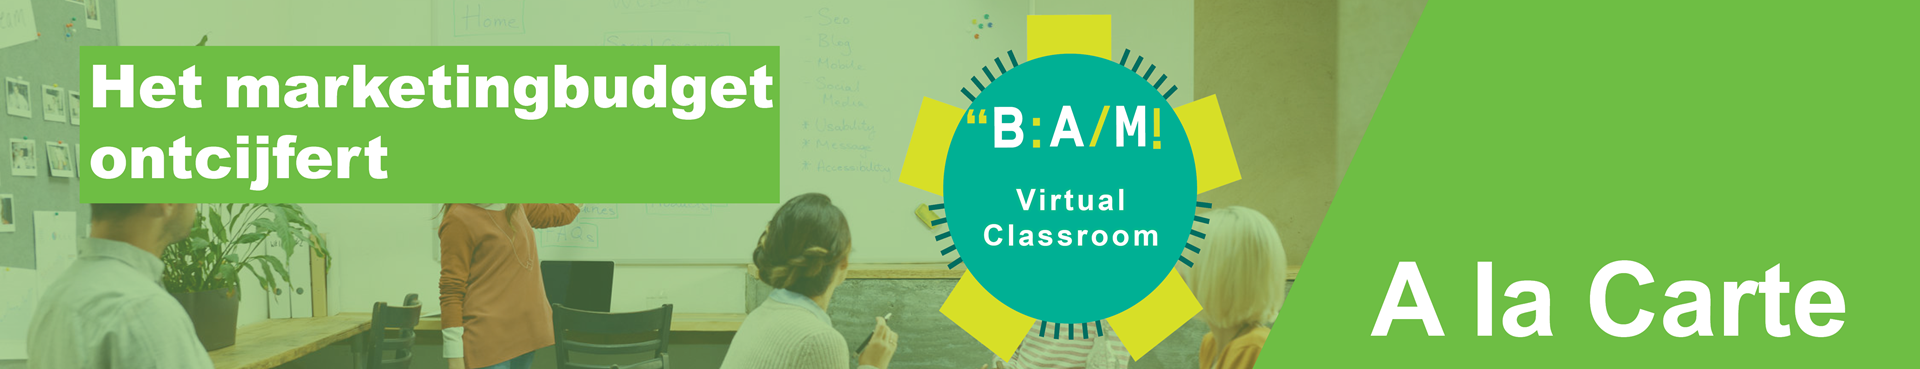 marketingbudget ontcijfert_virtual classroom